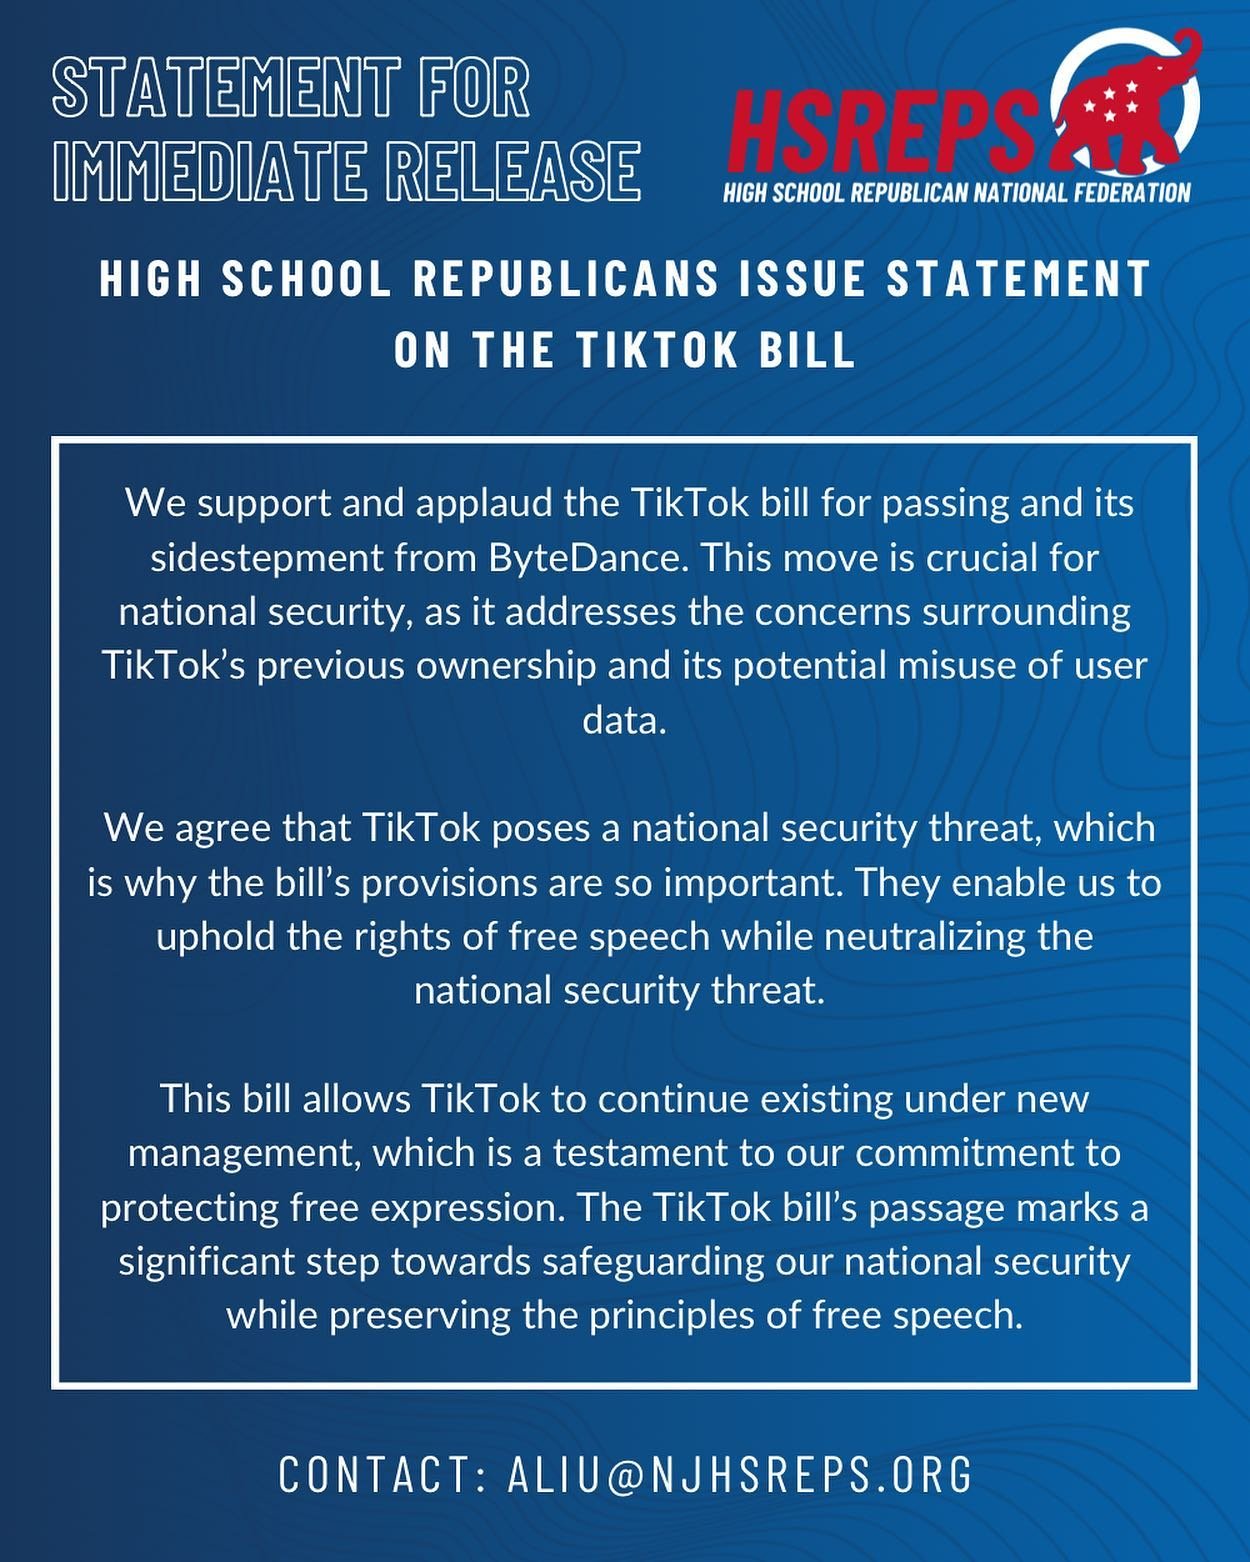 Statement for immediate release on the TikTok bill